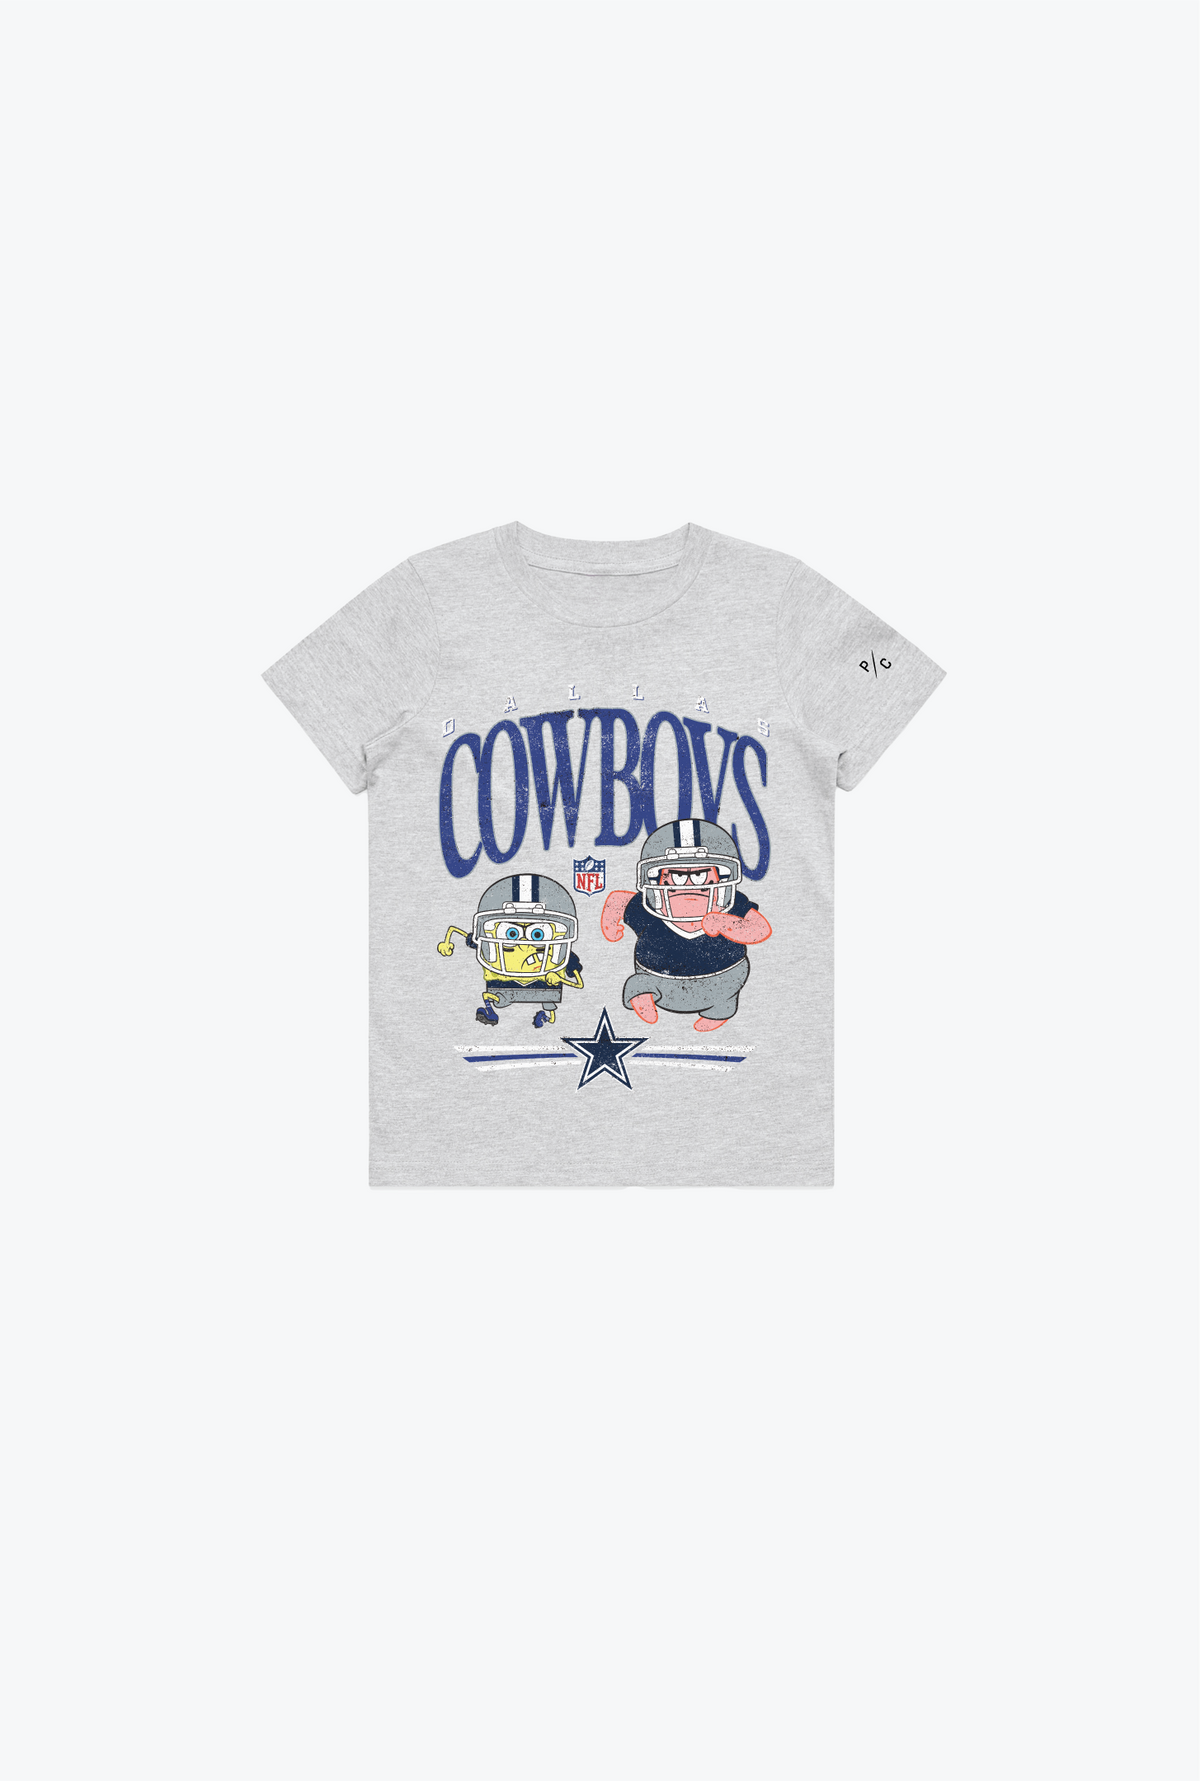 Spongebob & Patrick Rush Kids T-Shirt - Dallas Cowboys